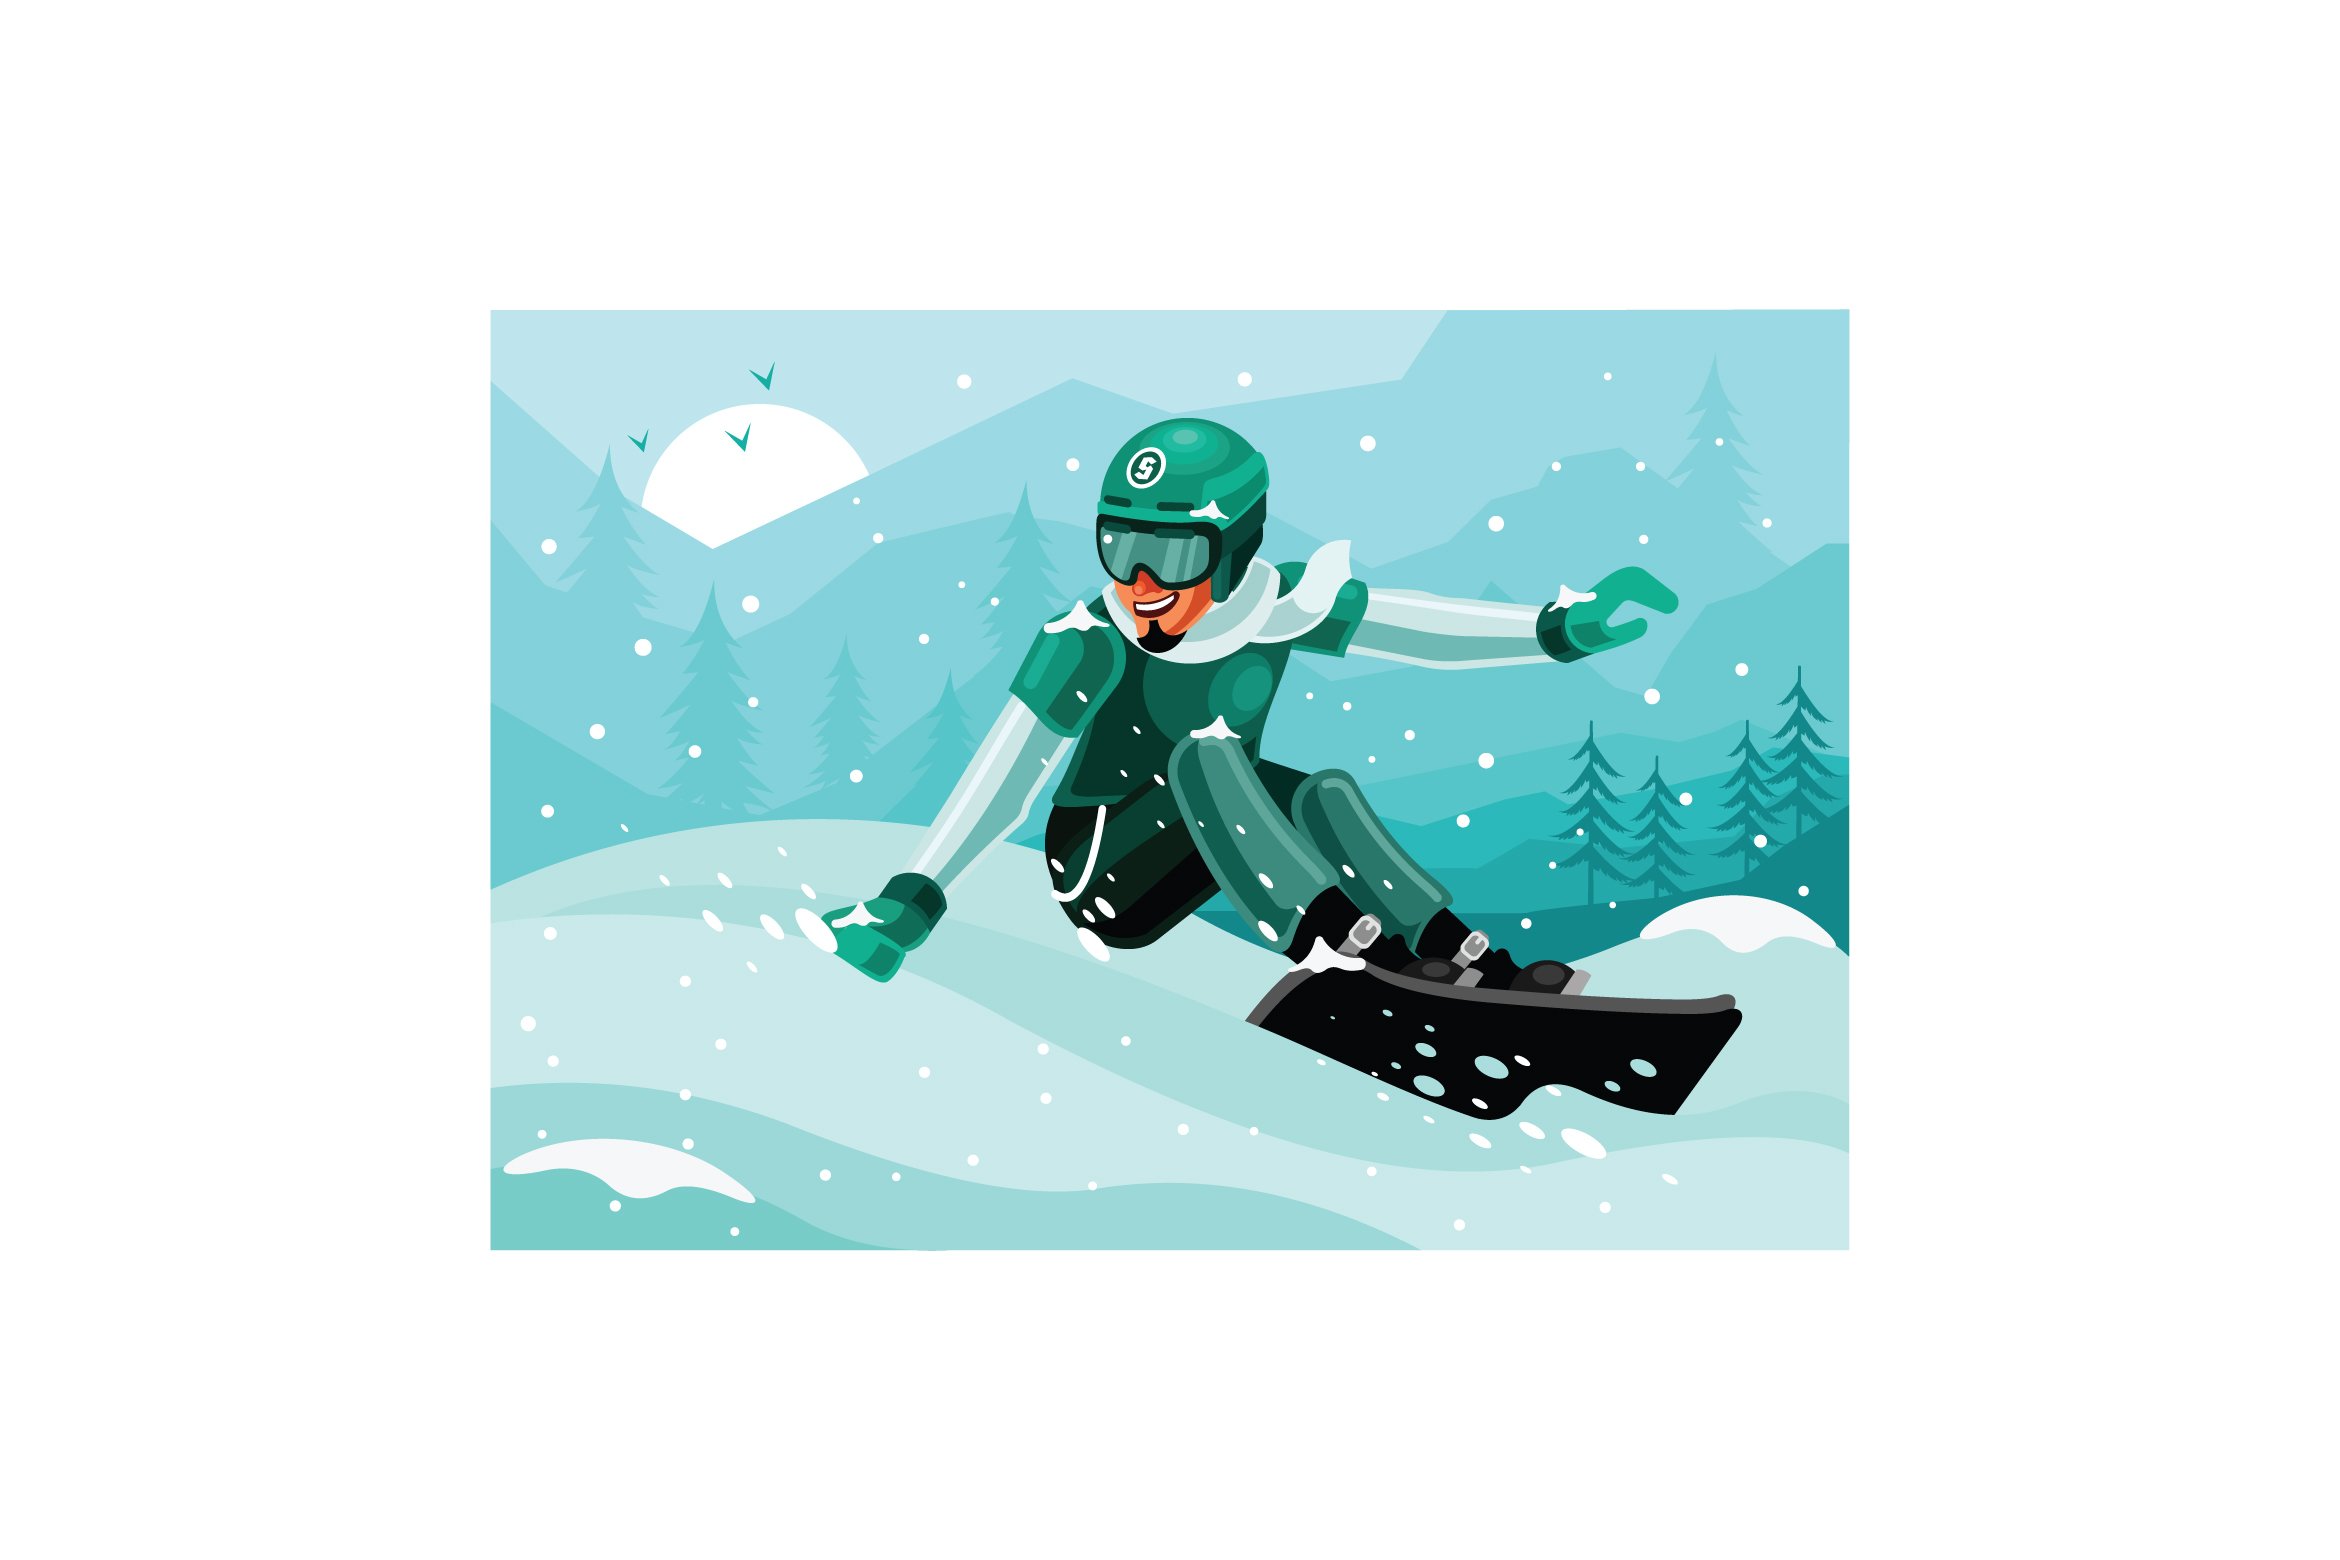 Snowboarder Winter Illustration cover image.